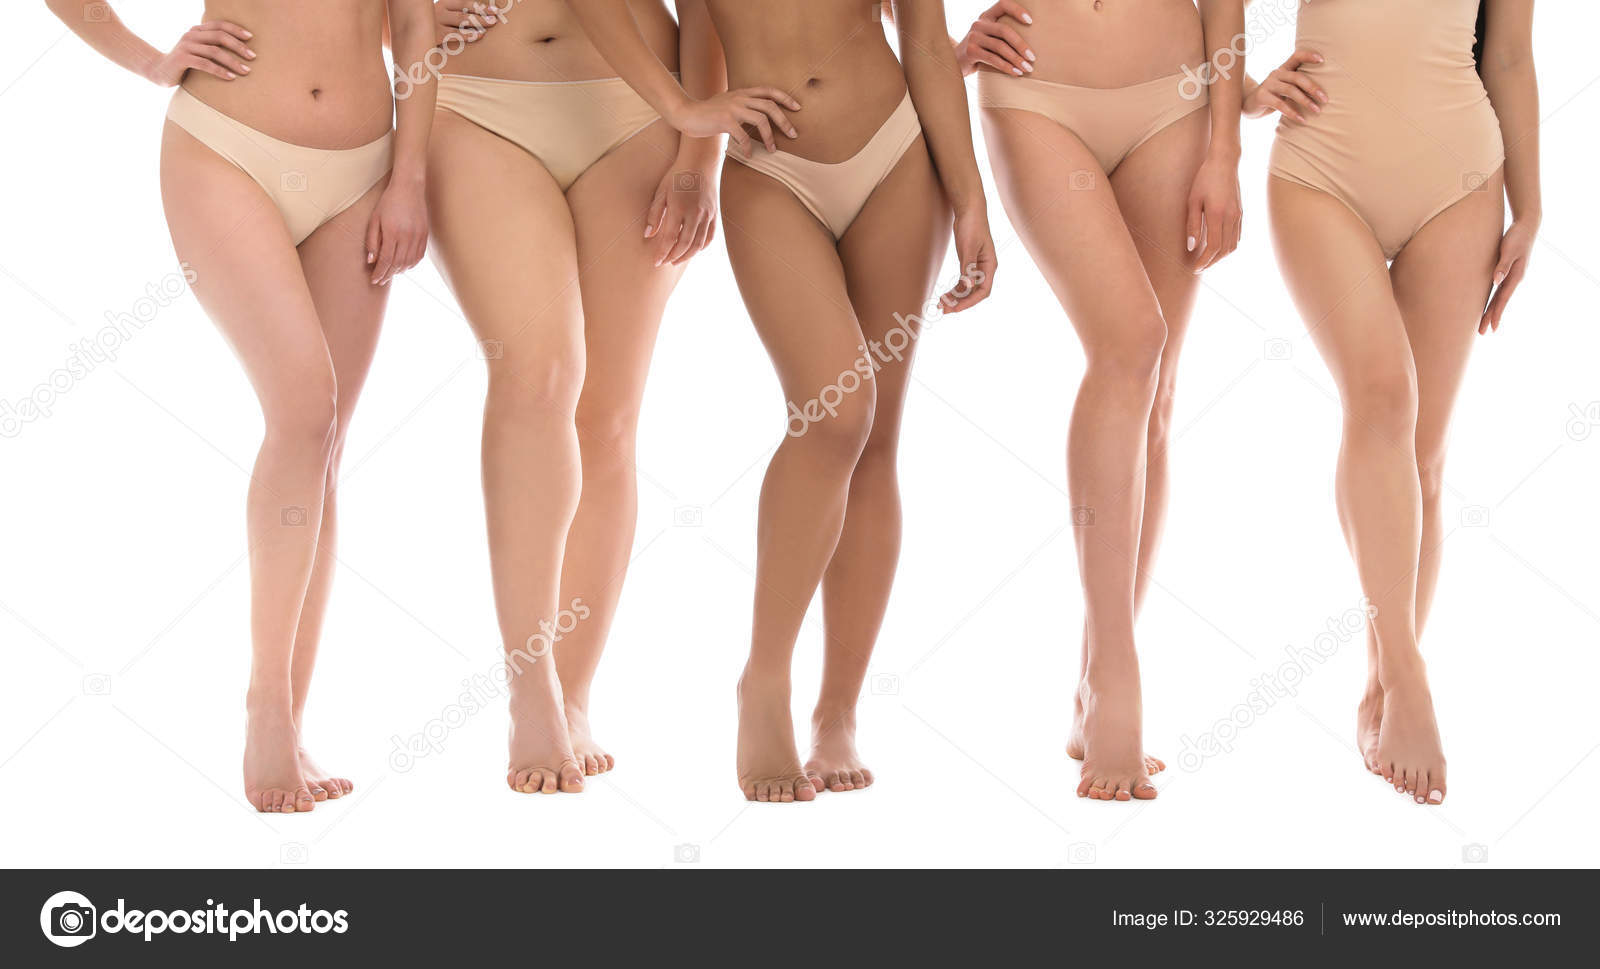 https://st3.depositphotos.com/16122460/32592/i/1600/depositphotos_325929486-stock-photo-group-women-different-body-types.jpg